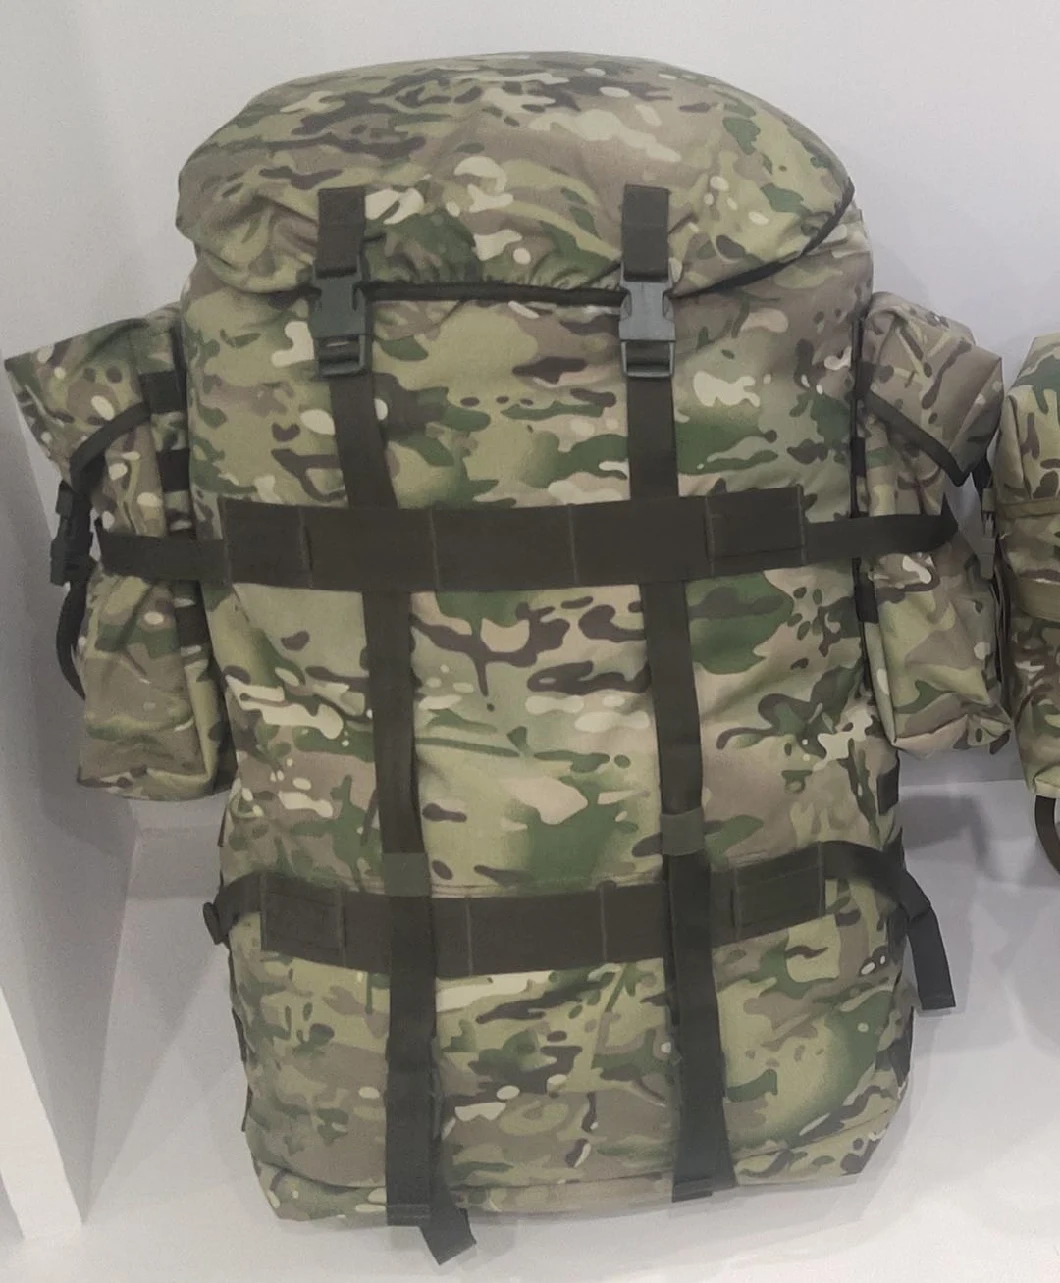 Durable Waterproof High-Capacity Military Camping Backpacks